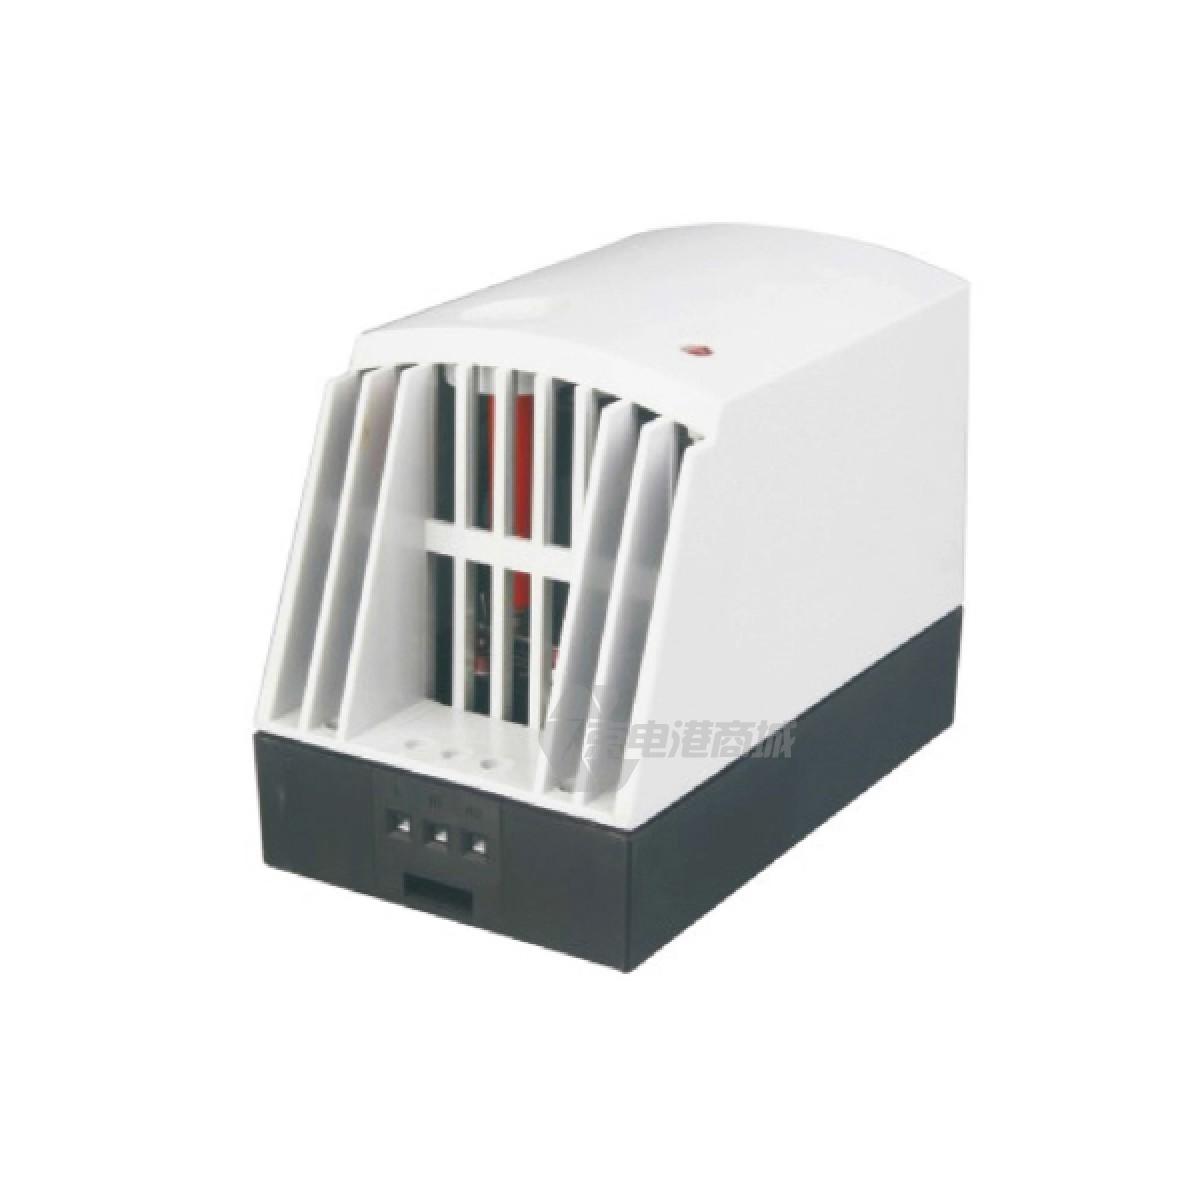 Cofeng Semiconductor Fan Heater Pr027 UP To 650W 半导体风机加热器 PR027